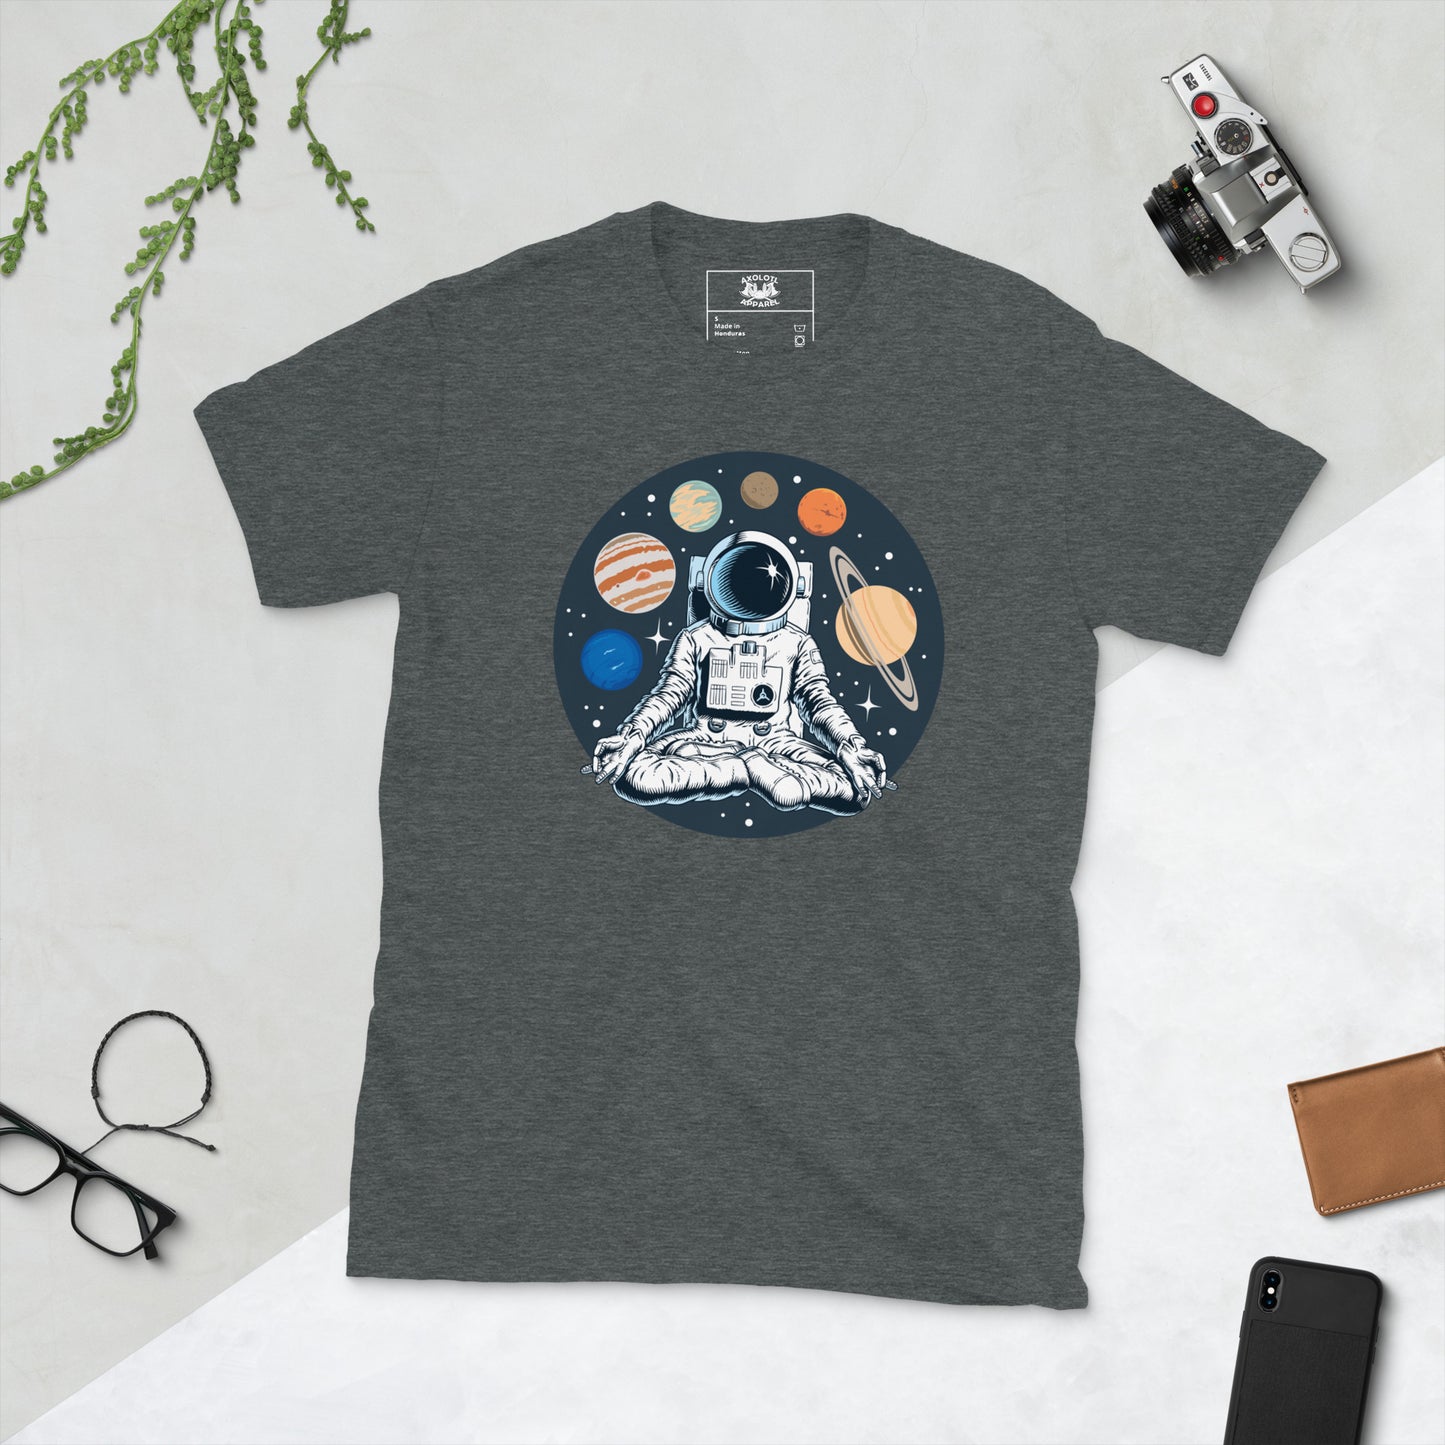 Ohmstronaut Short-sleeve Unisex Cosmic Meditating Astronaut T-shirt Dark Grey Flat